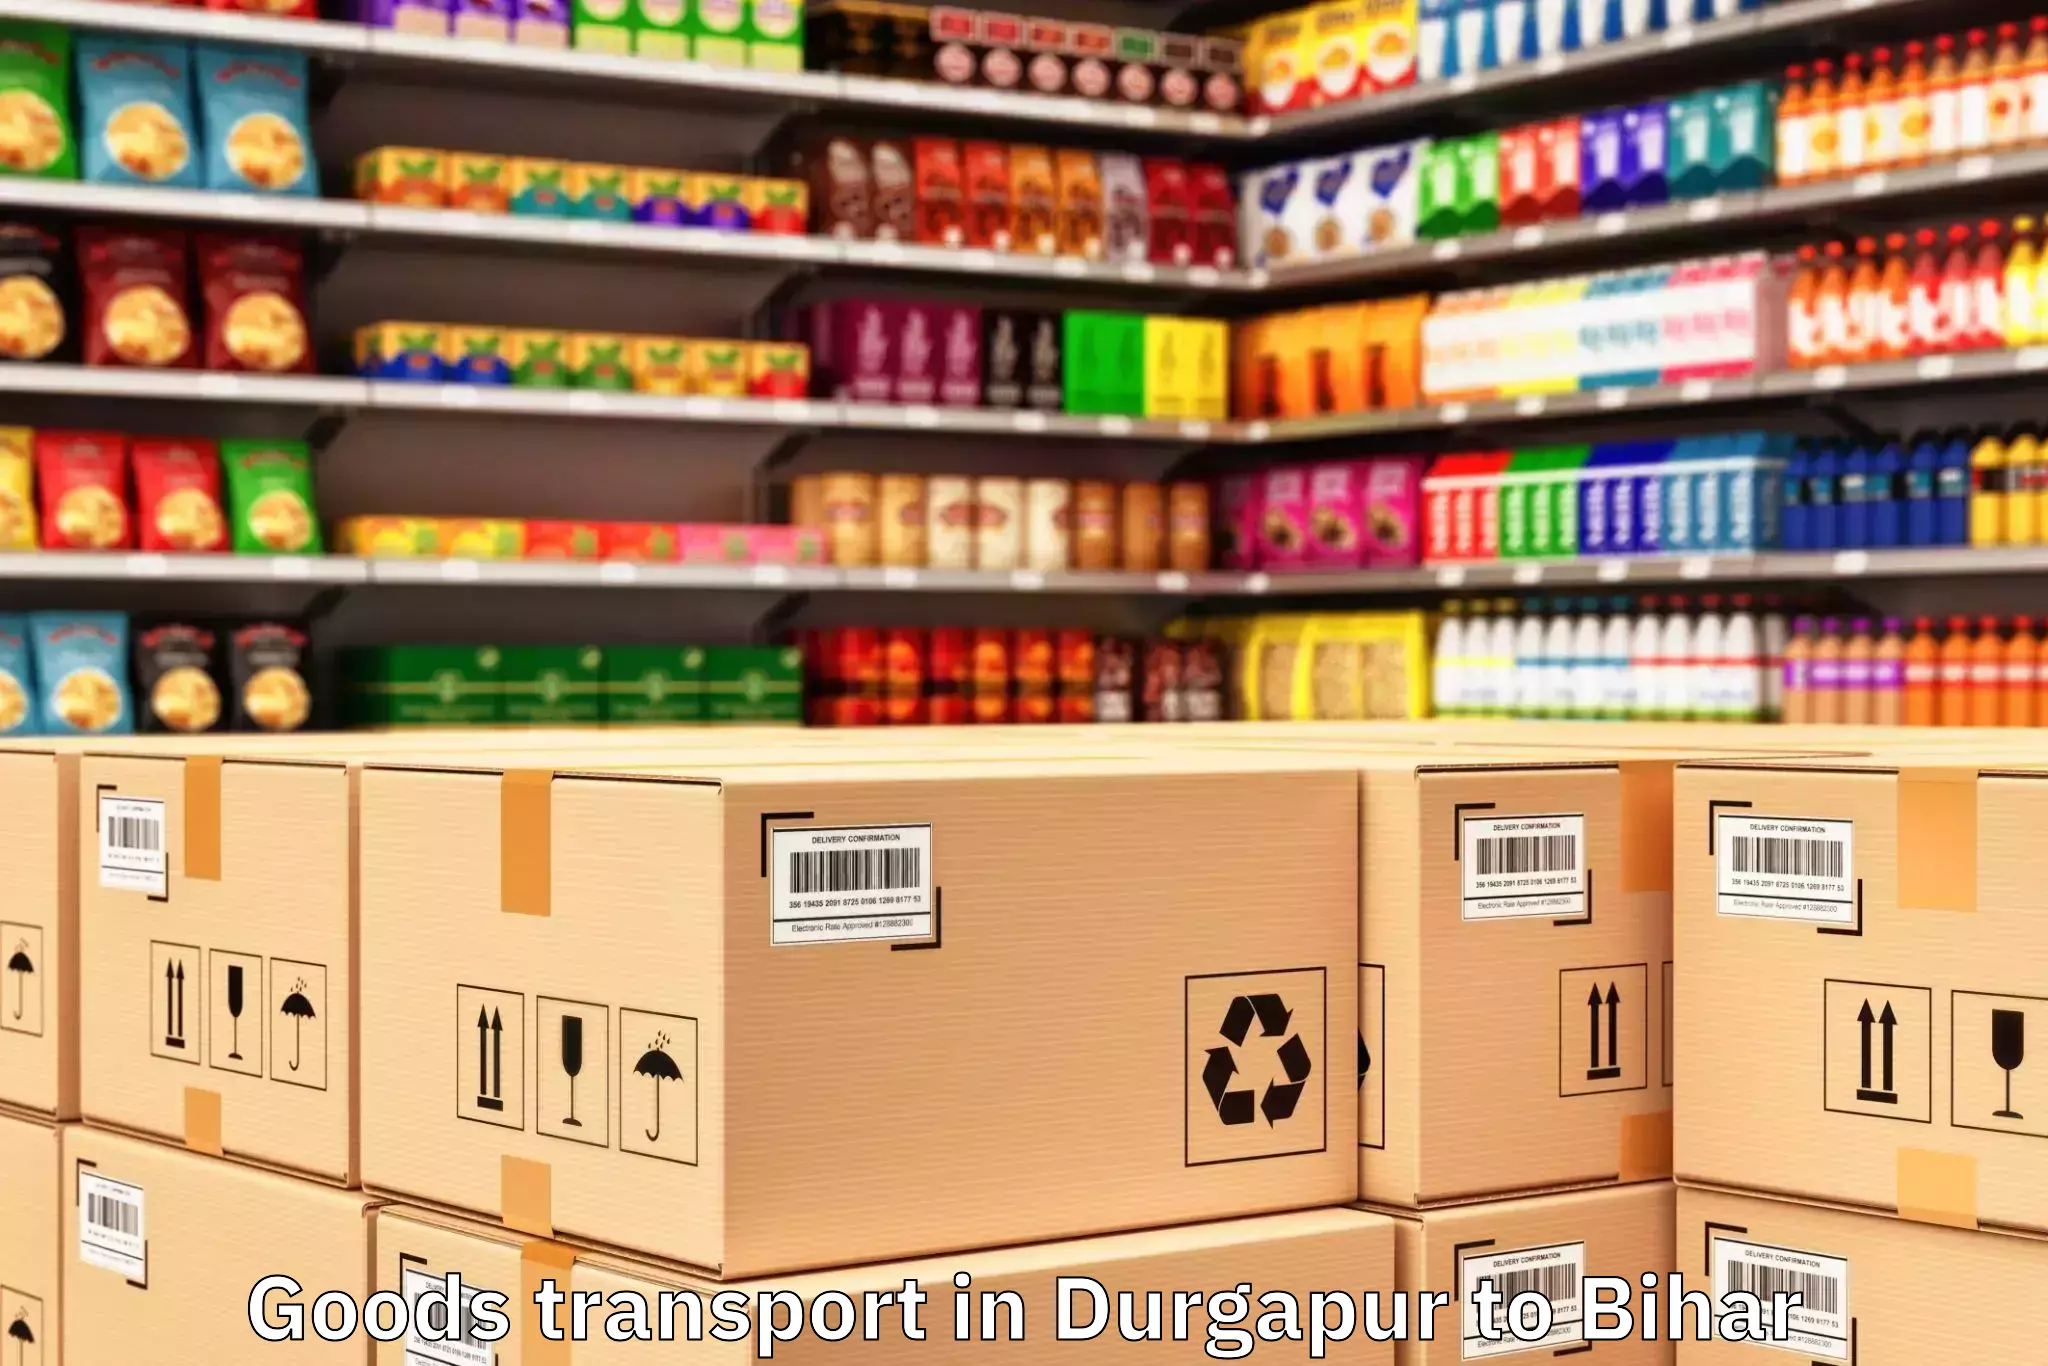 Quality Durgapur to Goraul Goods Transport